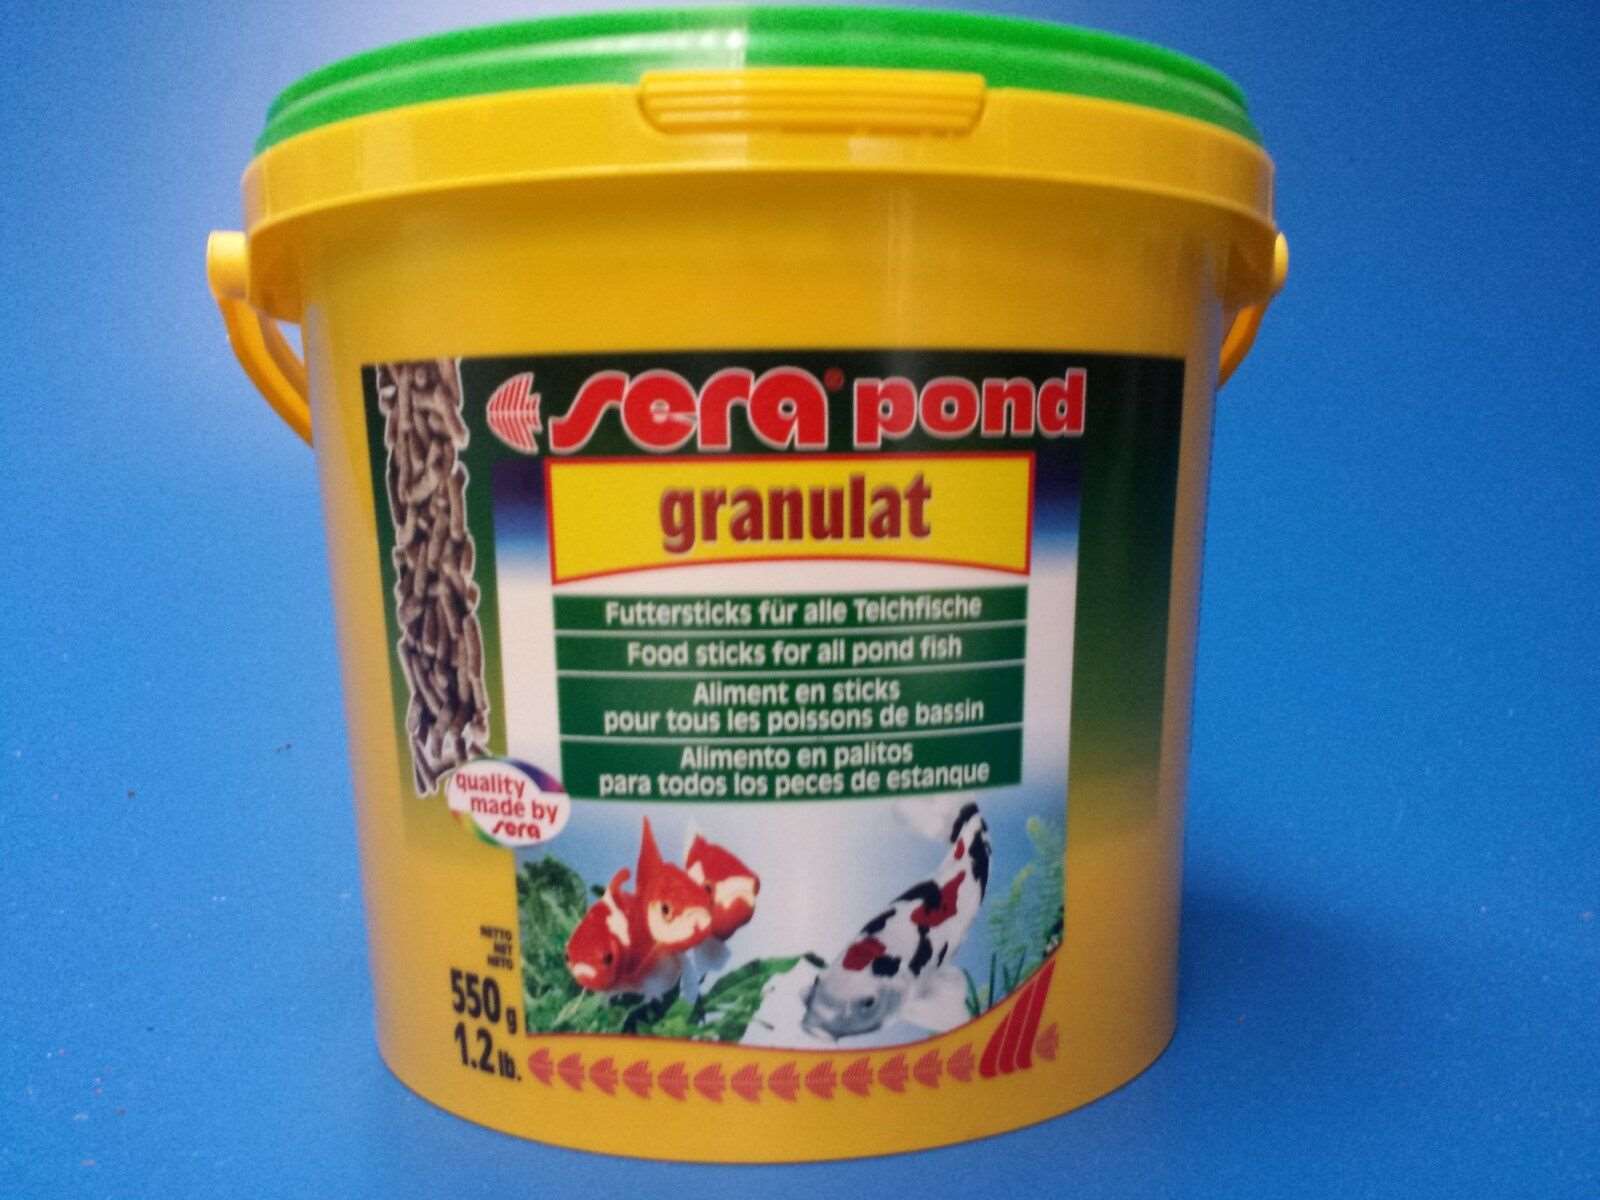 New Sera Pond biogranulat Pellet Food 550g, the best quality pond fish food!